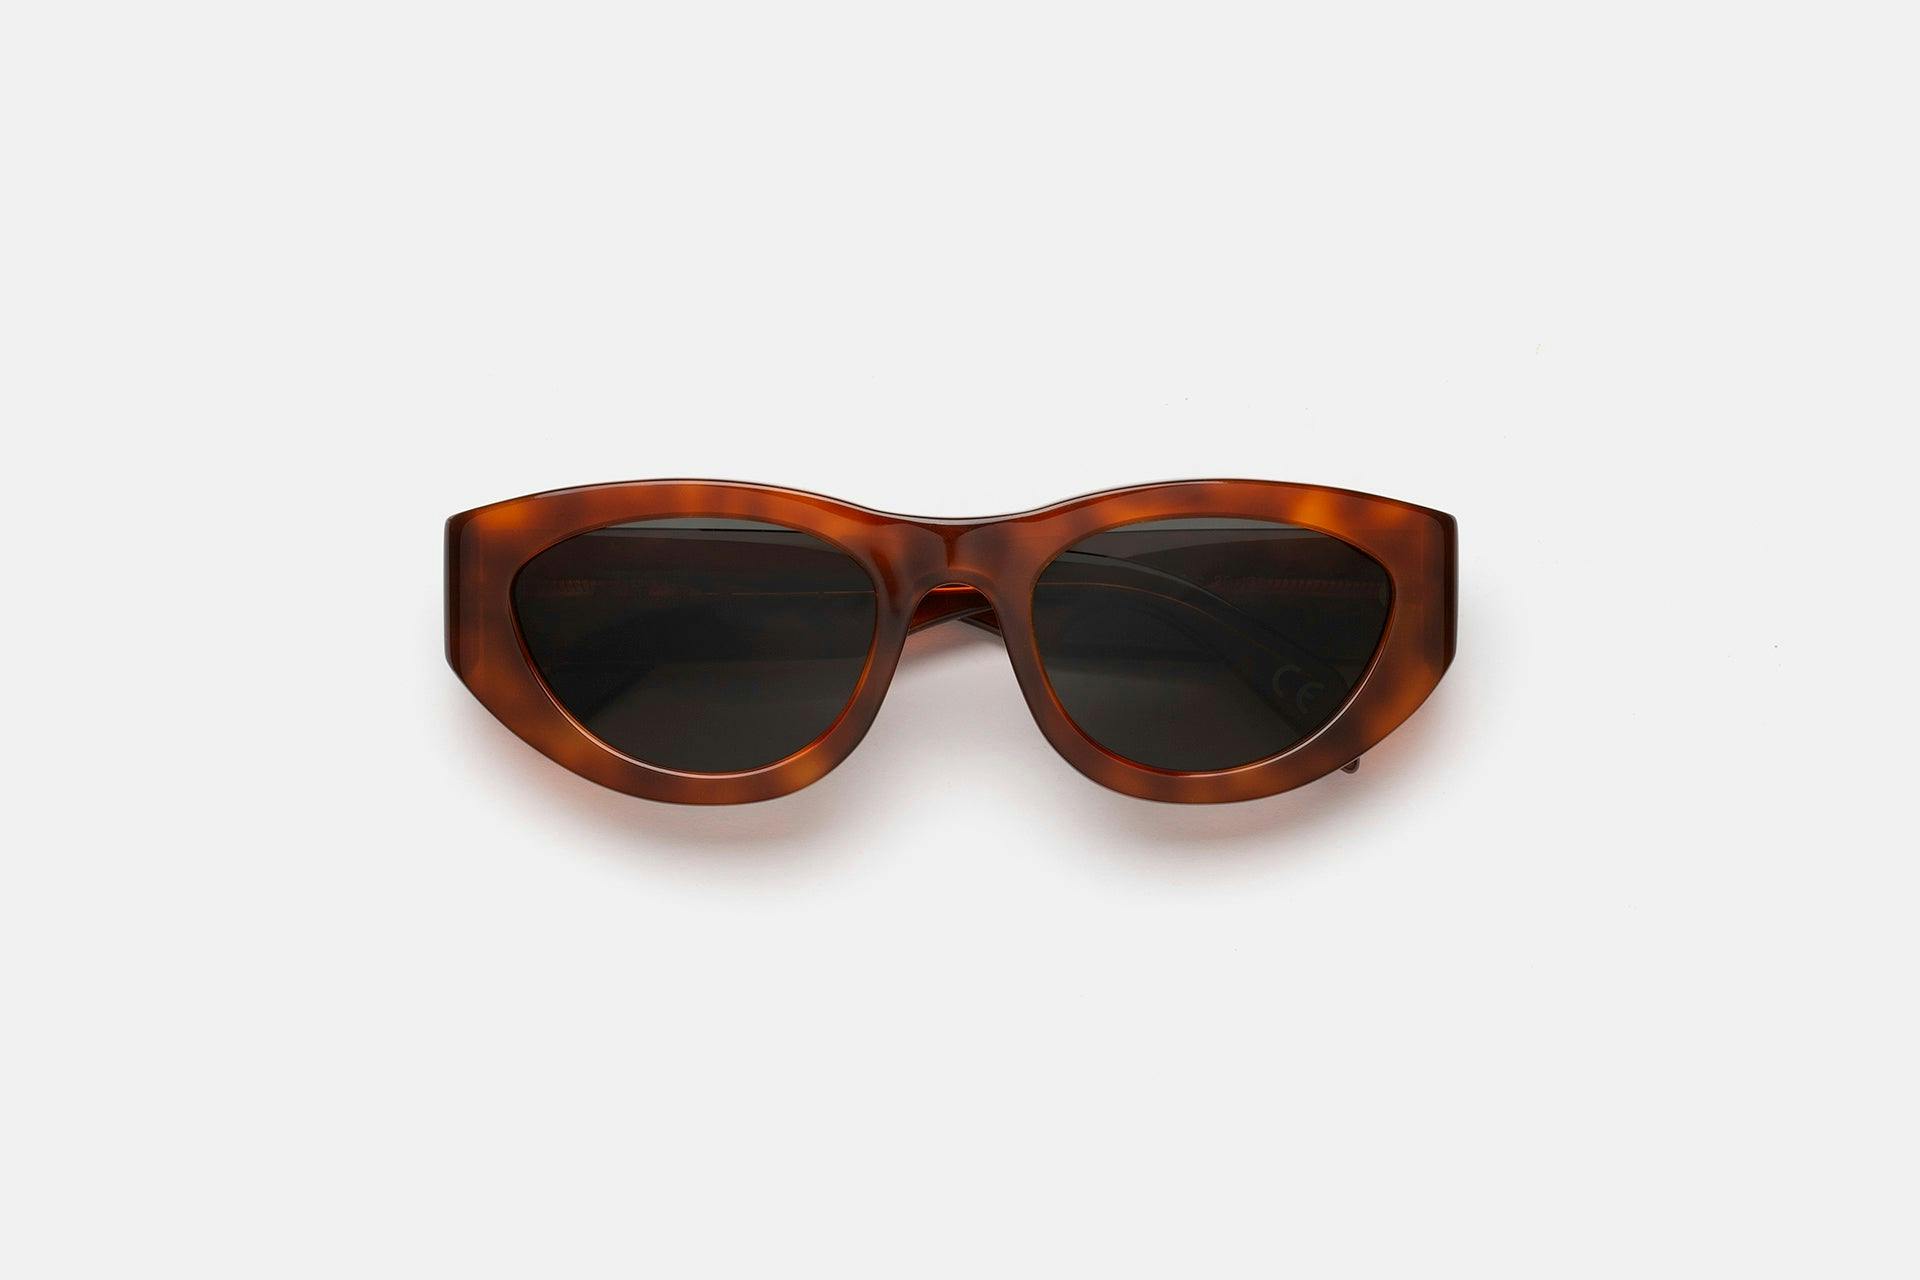 Tortoiseshell rounded cat-eye sunglasses